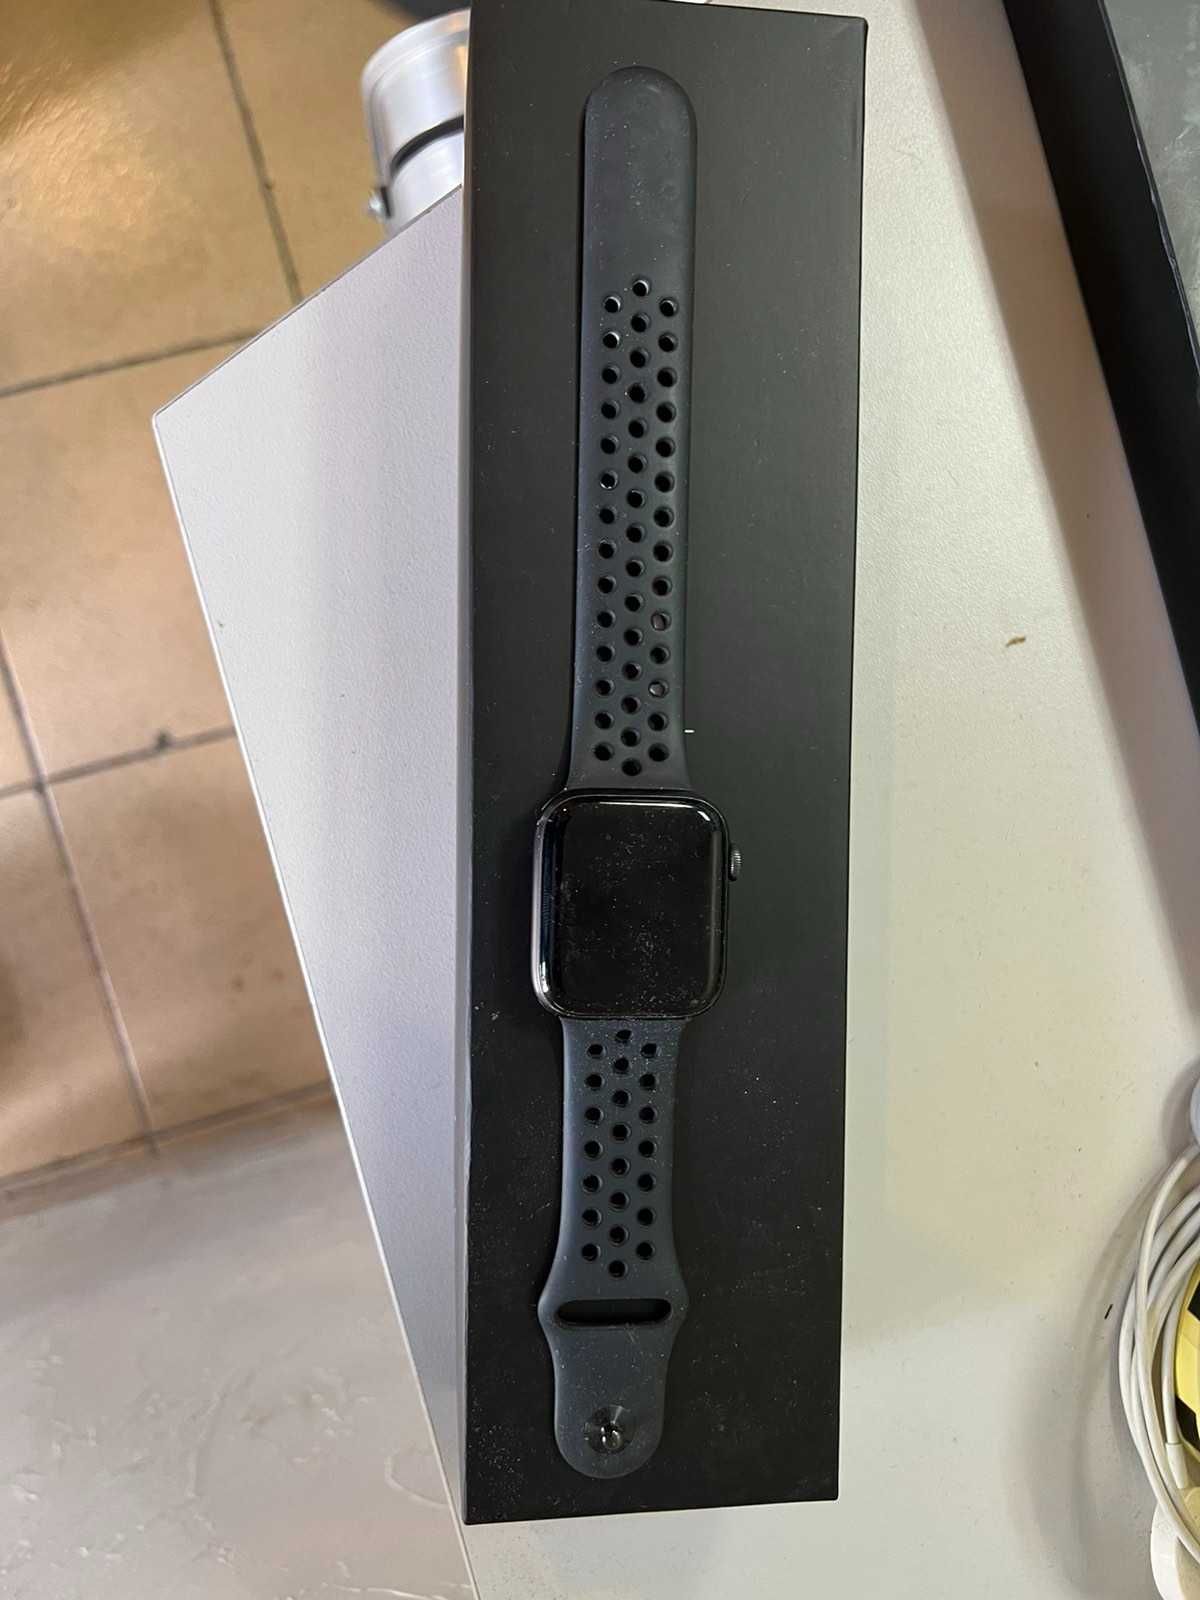 Apple Watch Series 6 Nike plus edition/44mm Black